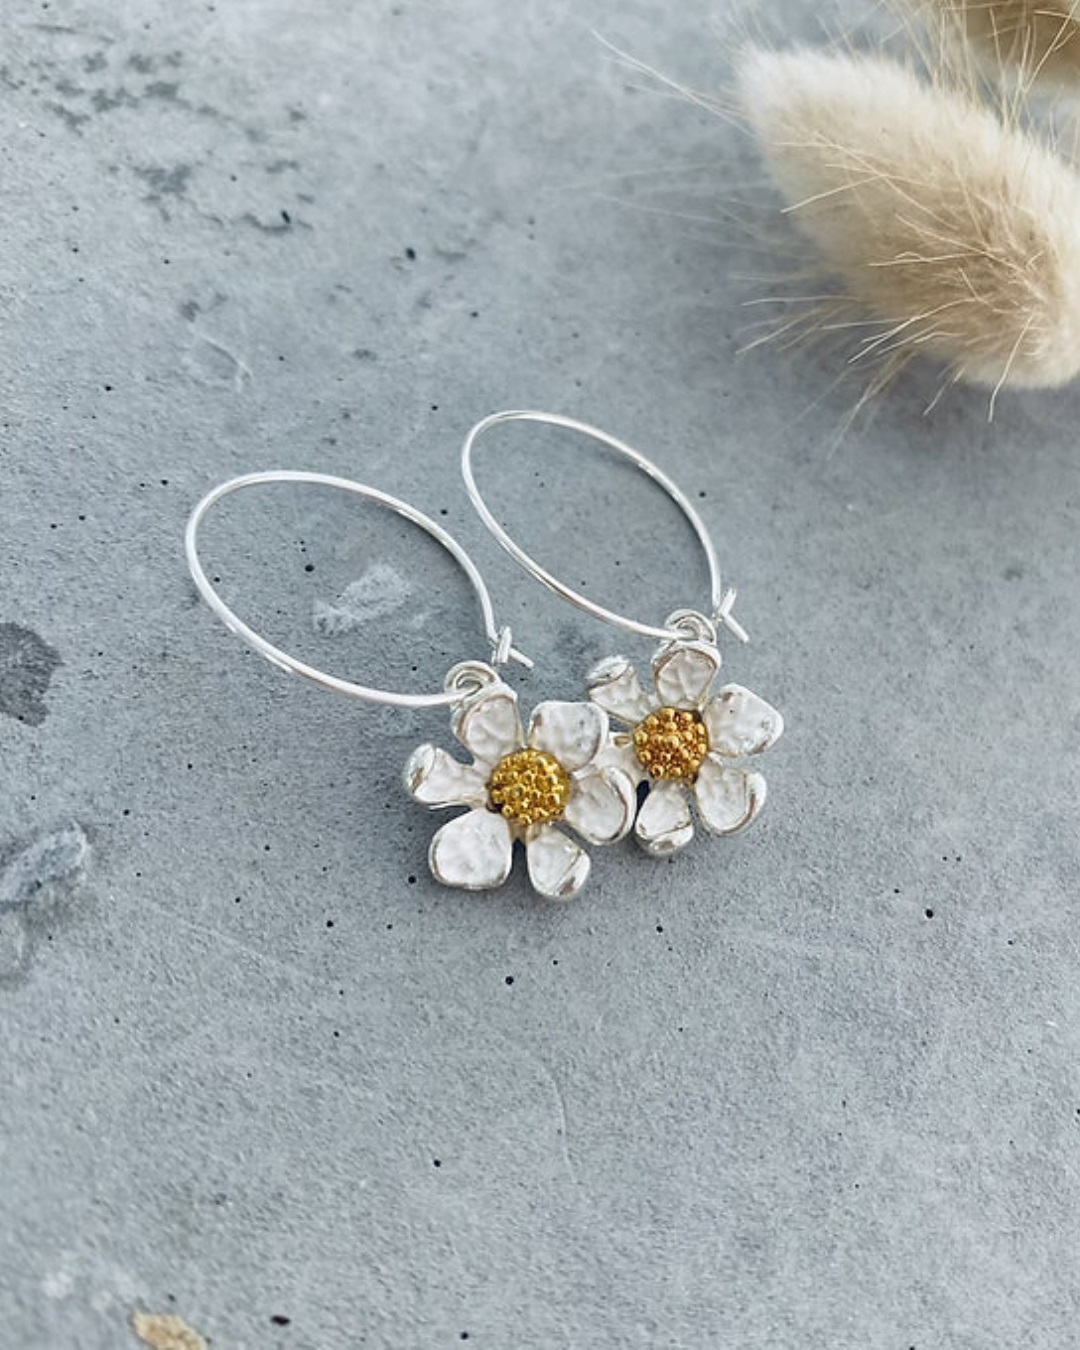 Flower gold hoop earrings on grey stone